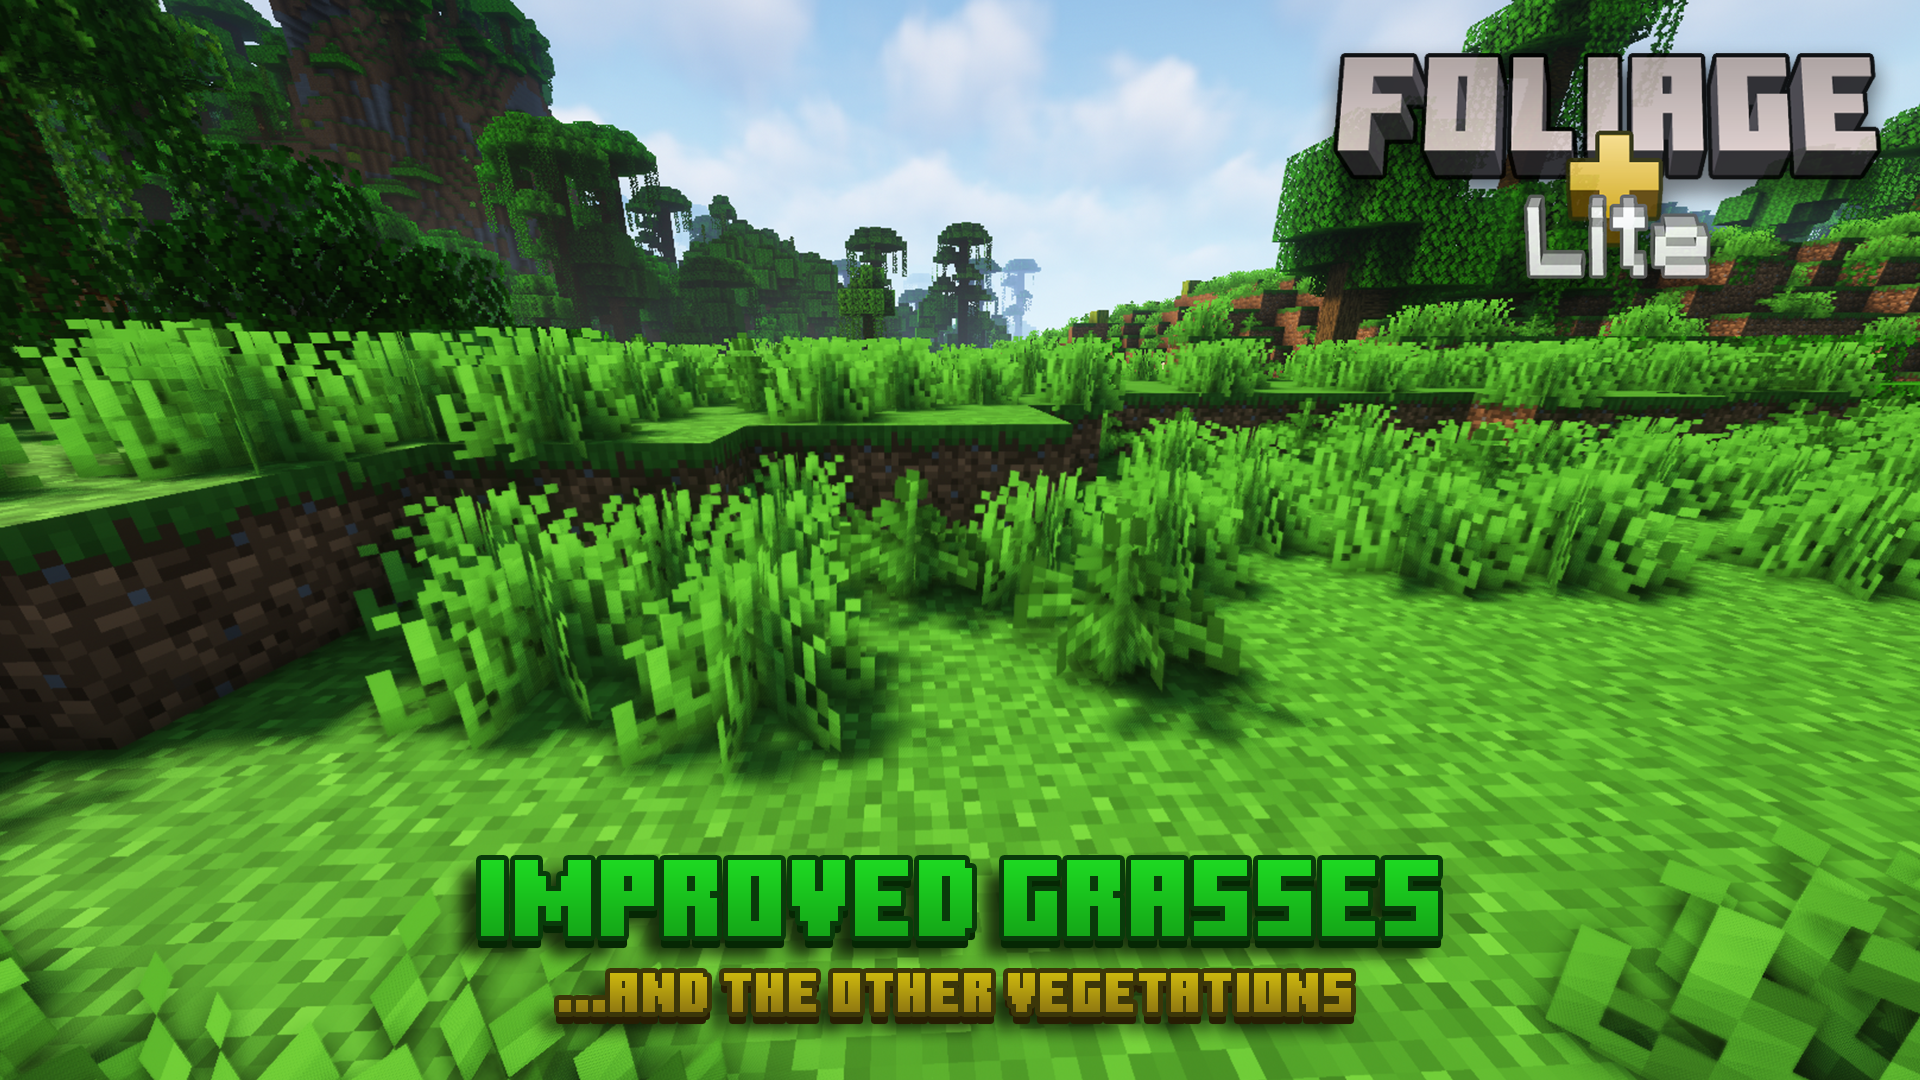 Improved Grasses